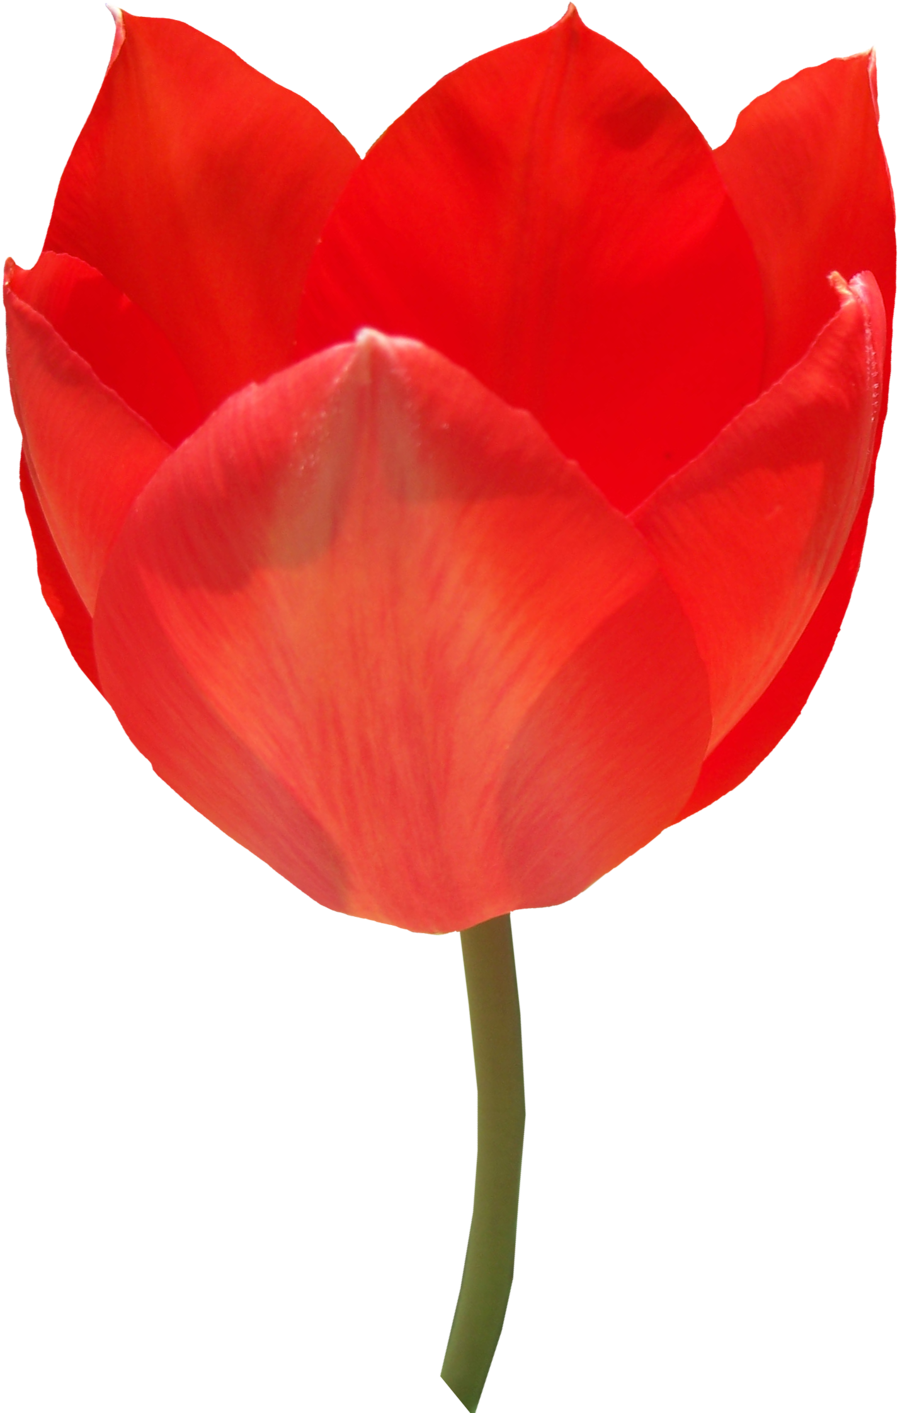 Red Tulip, flower